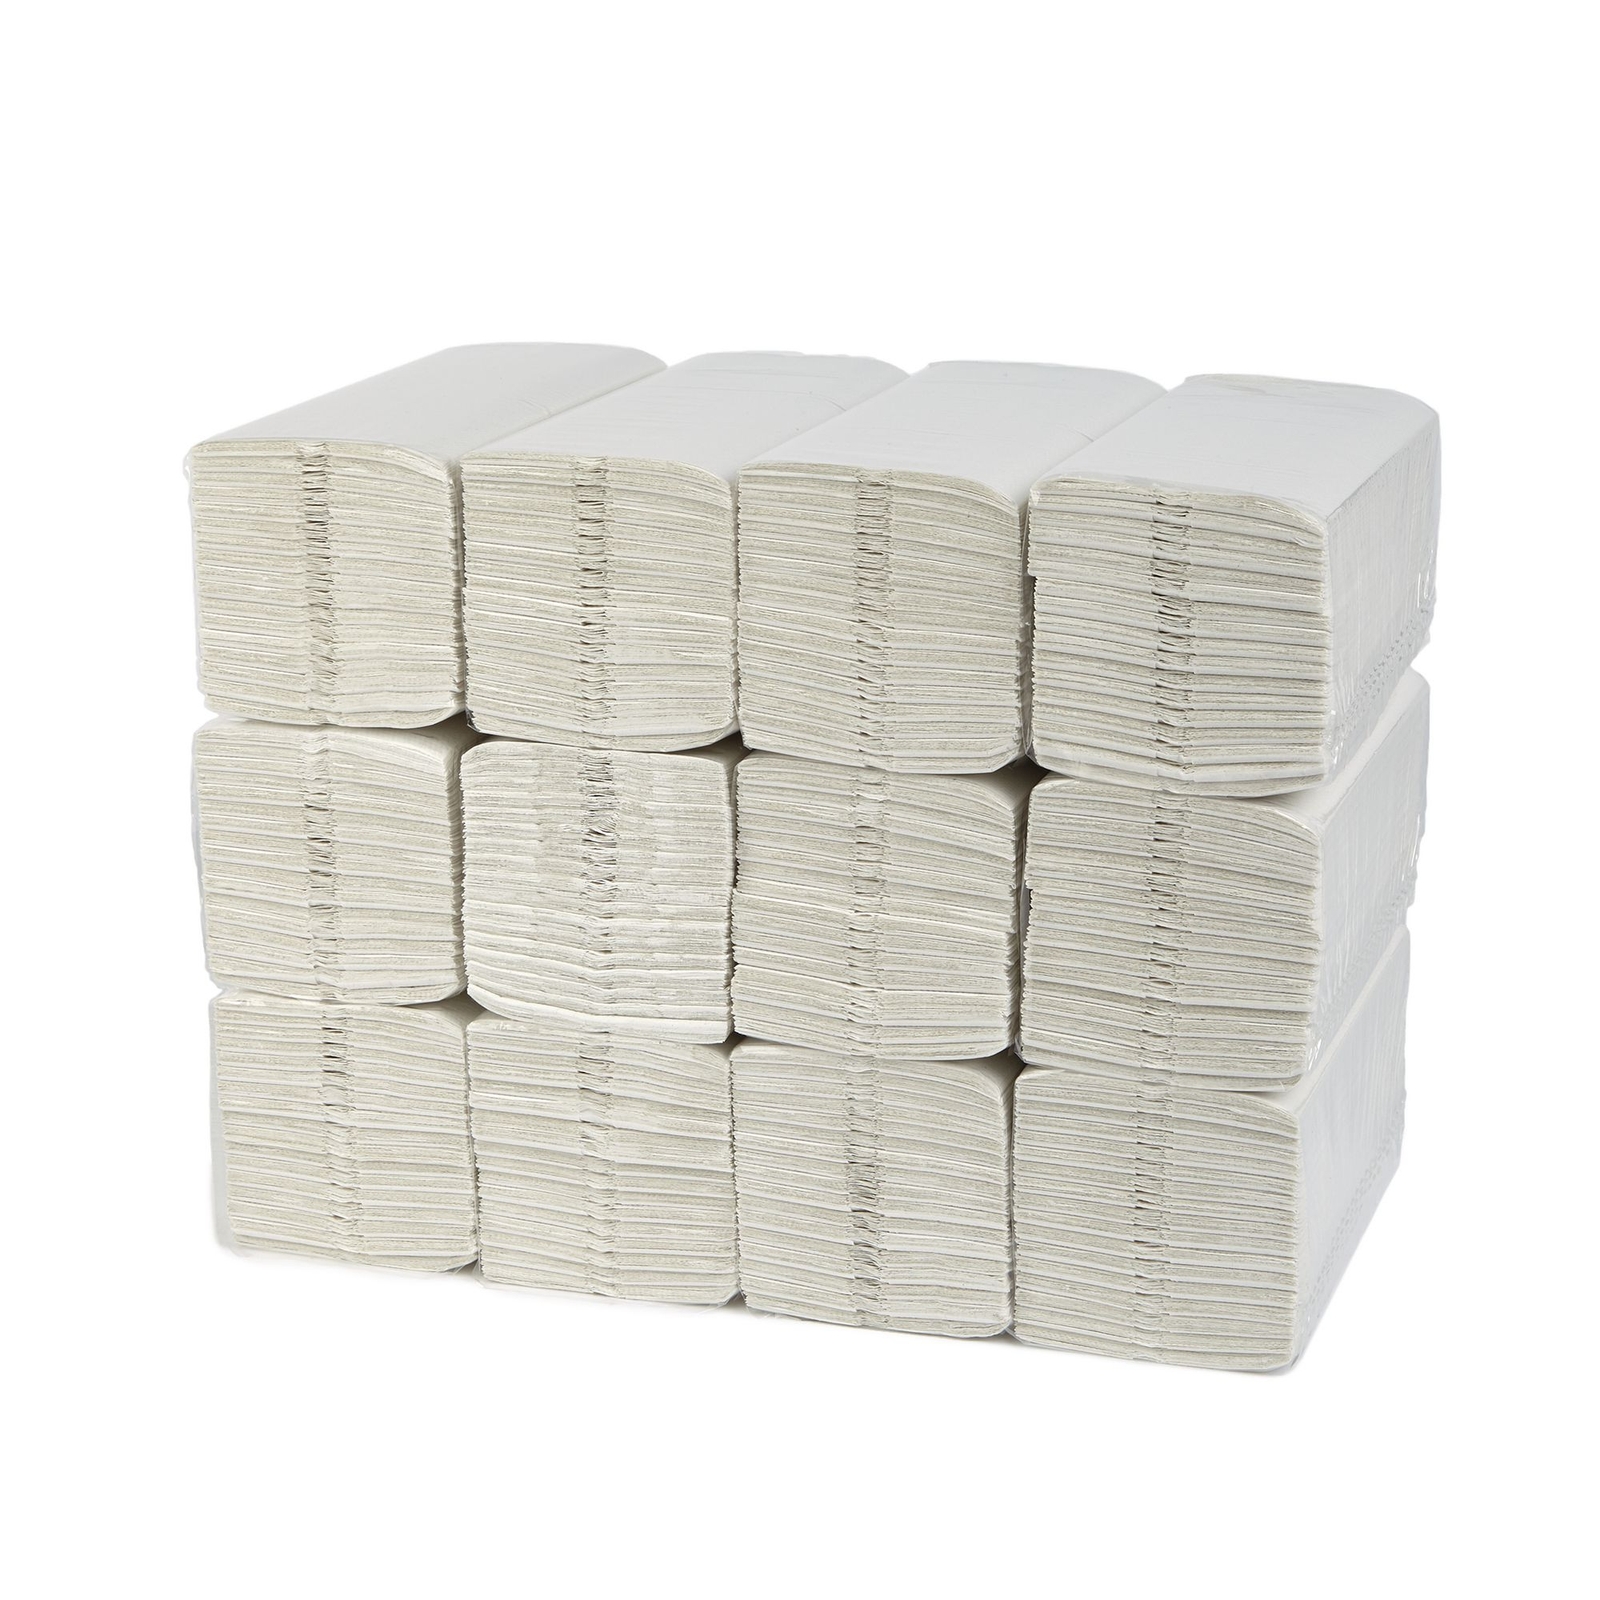 Classmates C Fold White 2Ply Hand Towels